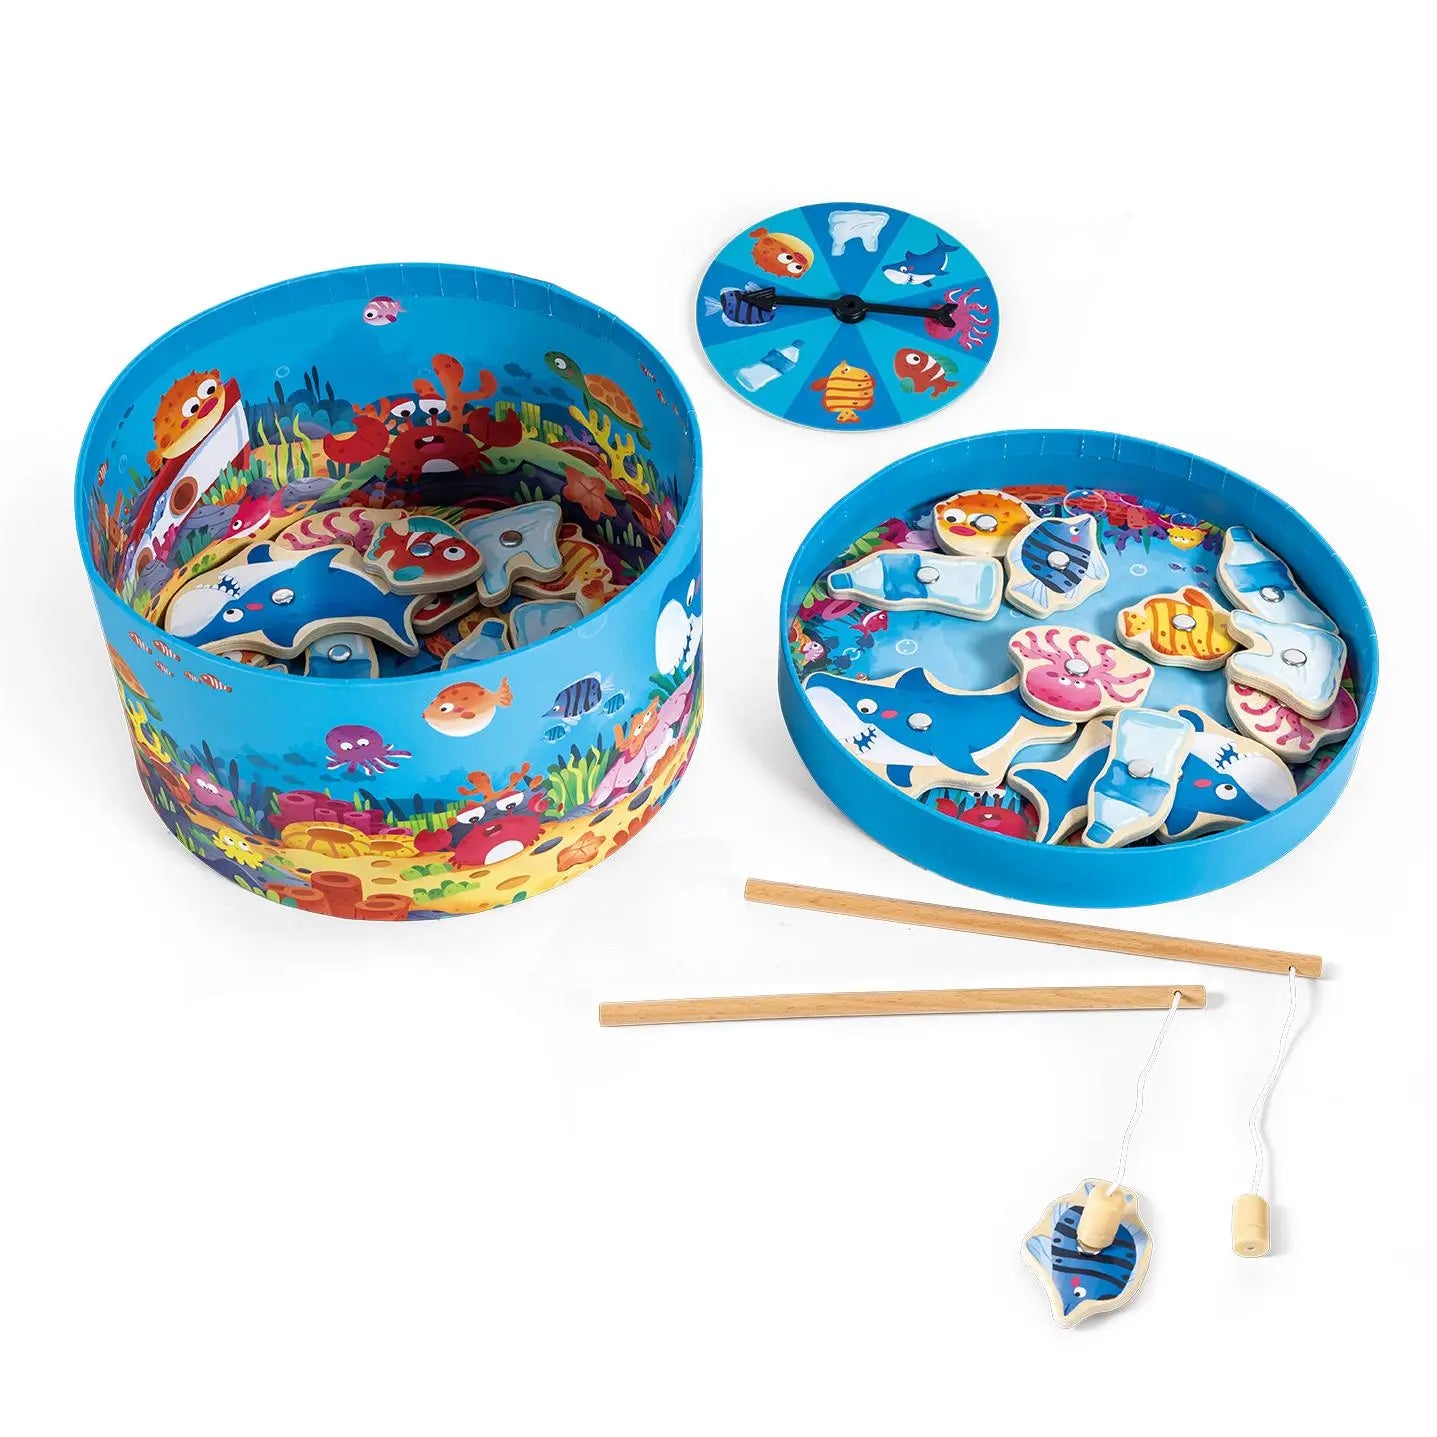 Hape Fishing game - Hape Toys (Hape International Inc.)